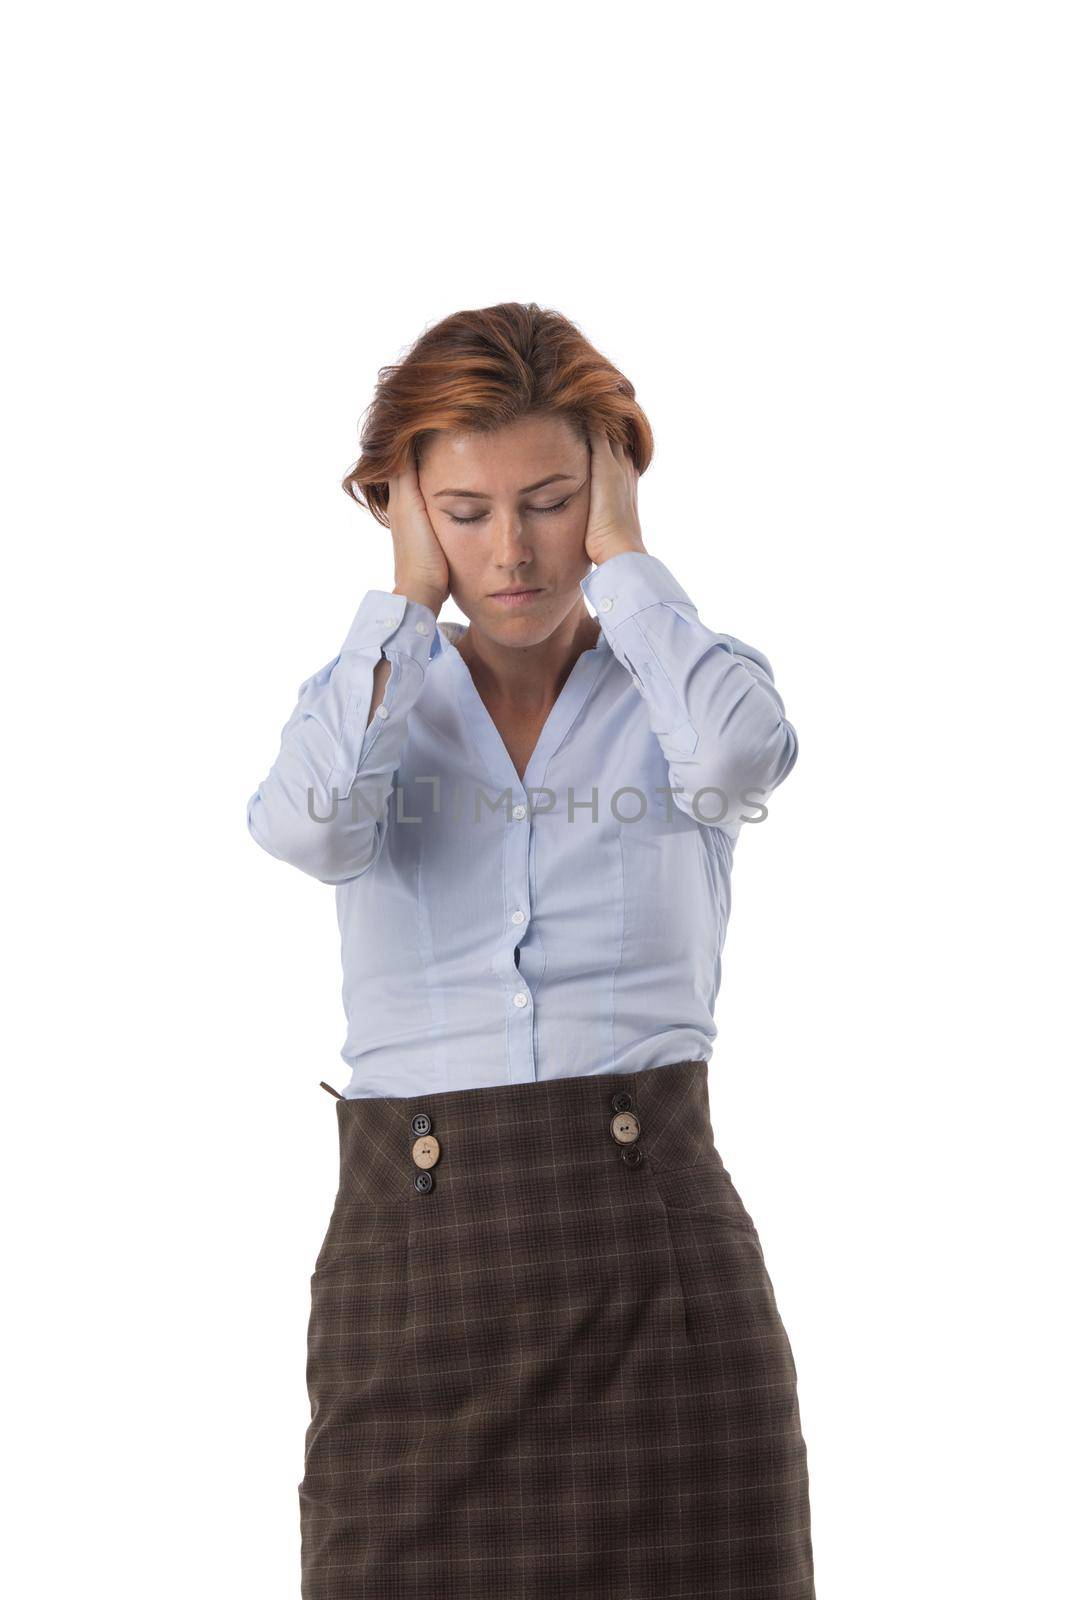 Businesswoman having headache by ALotOfPeople